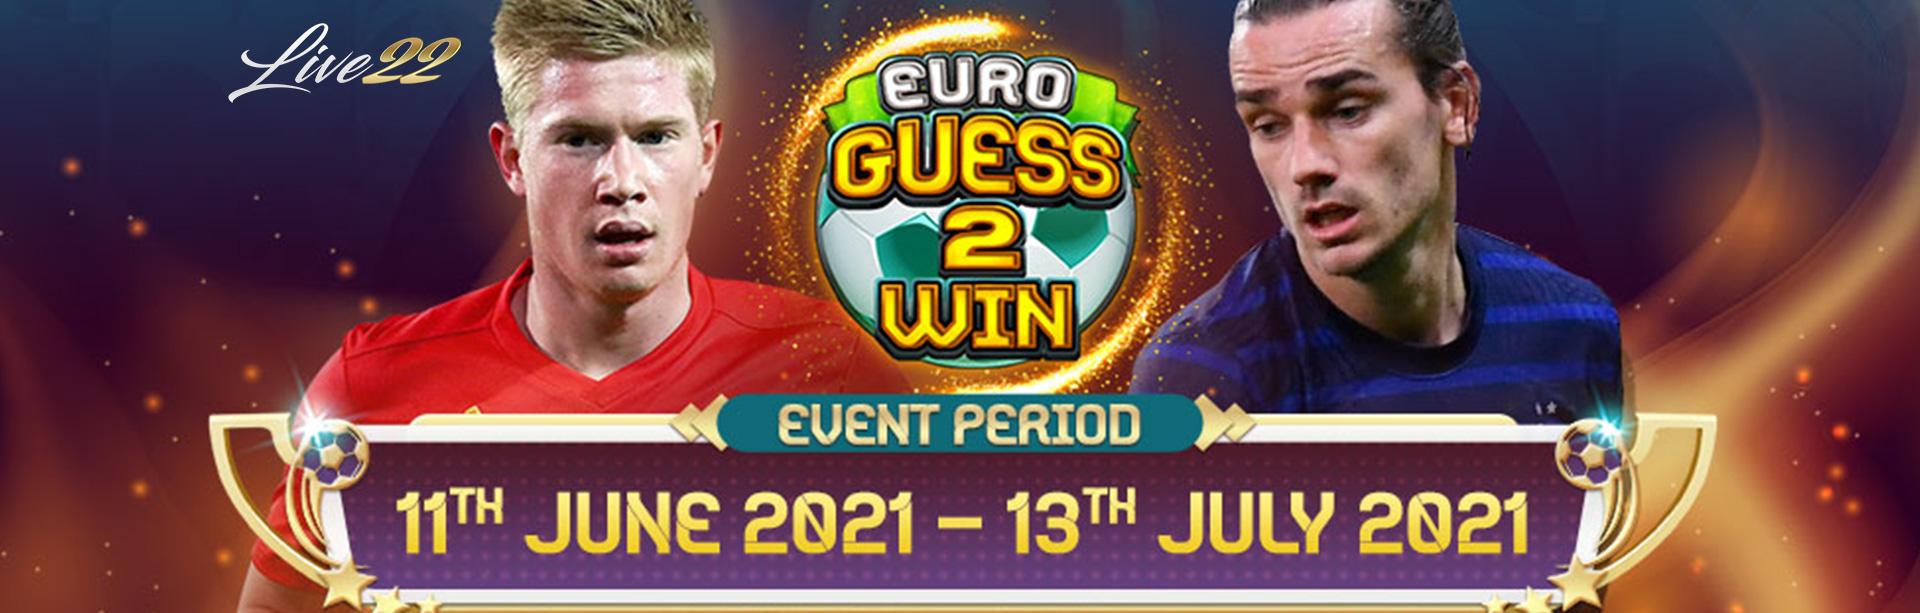 Mau Daftar Slot Live22 Euro Guess 2 Win